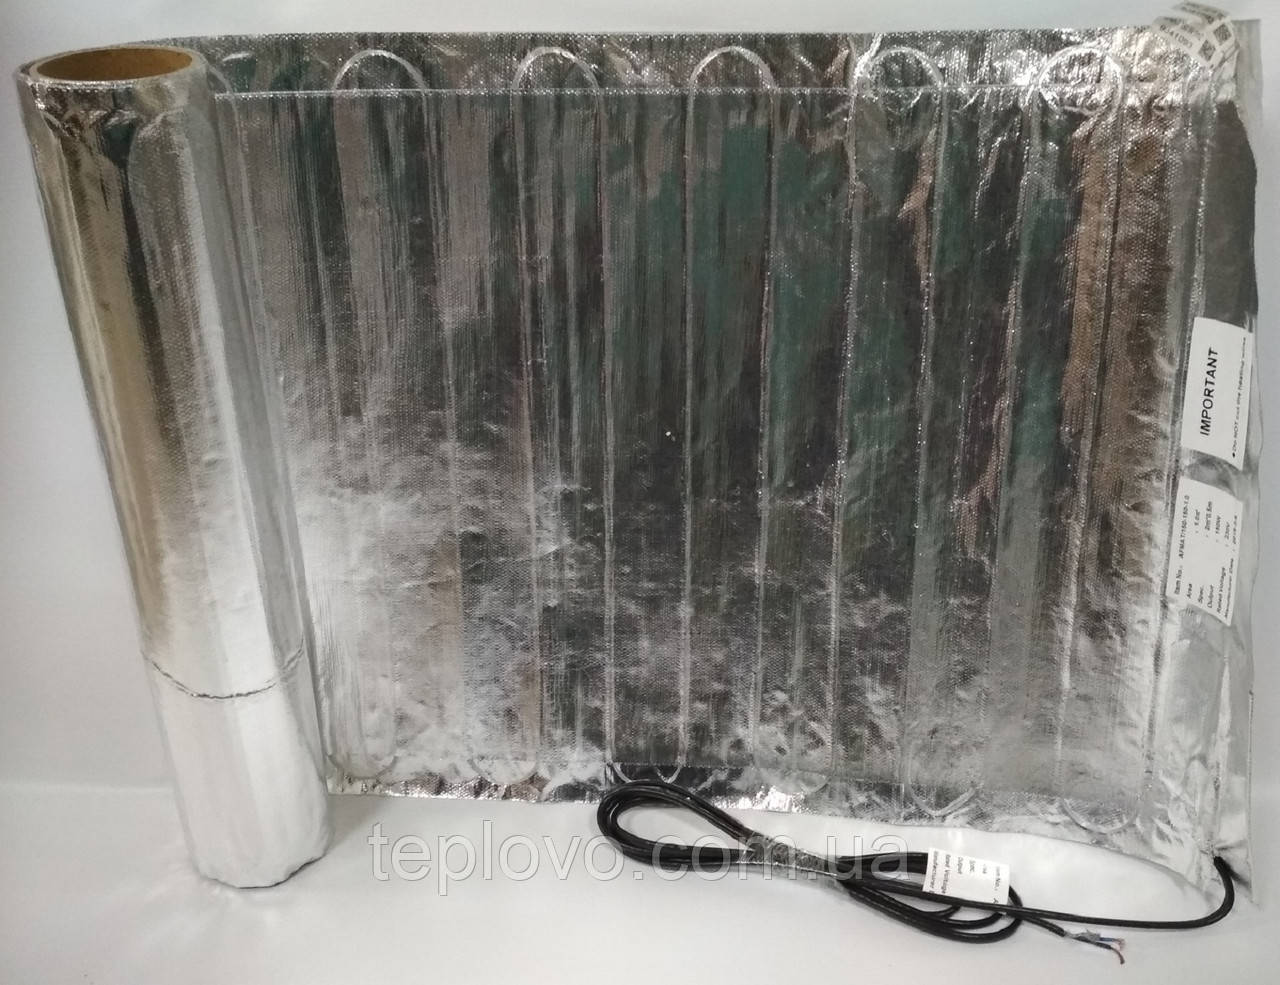 Алюмінієвий мат In-therm AFMAT 4,0 м2 (600 Вт, електрична тепла підлога під ламінат